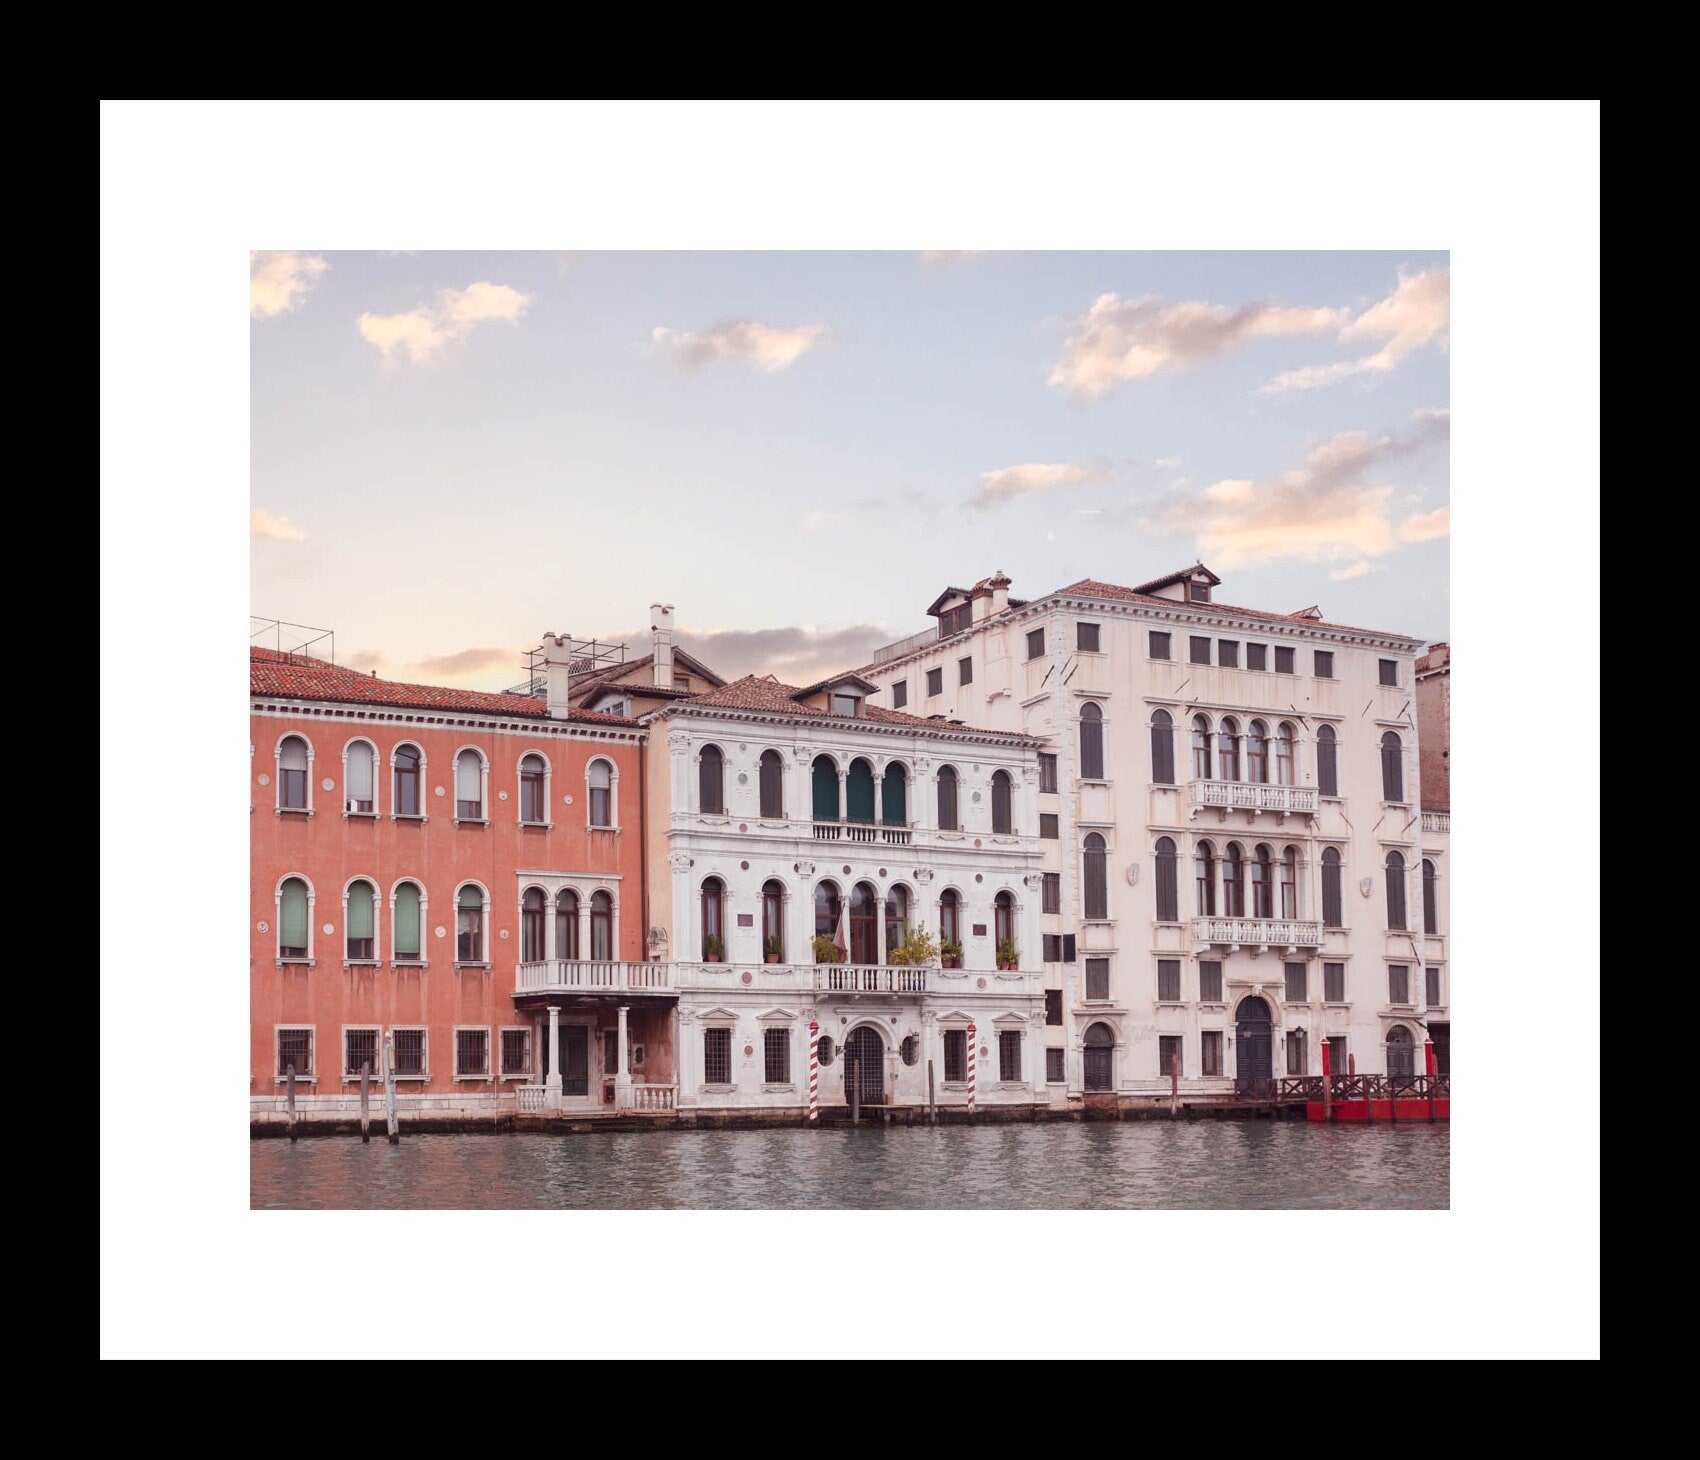 Venice Italy Canal Landscape Photography Print, European Architecture, Travel Souvenir, Living Room Wall Art, Unframed Photo or Canvas - eireanneilis